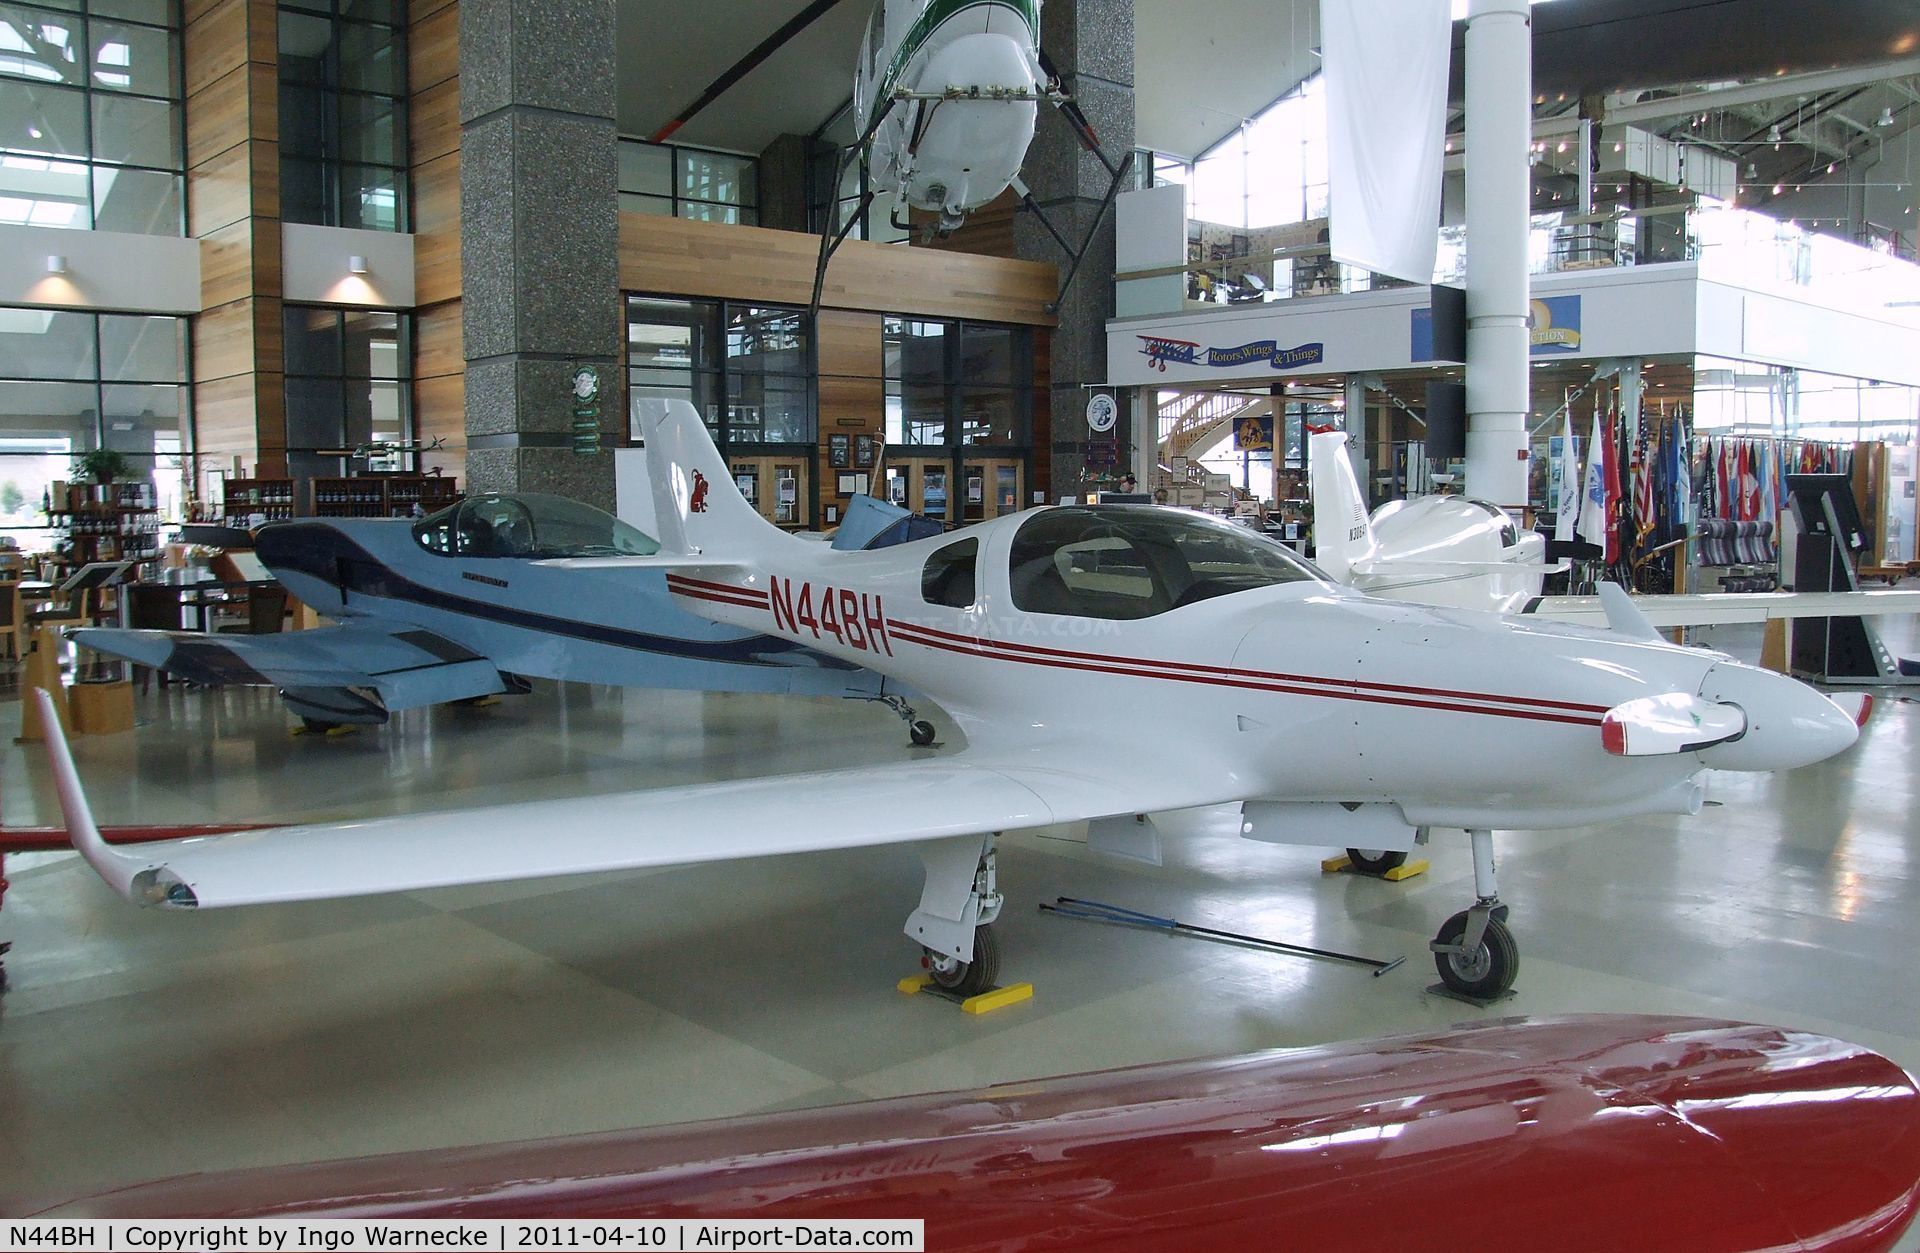 N44BH, 1995 Lancair 320 C/N 313, Lancair (R E Hannay / D A Martin) 320 at the Evergreen Aviation & Space Museum, McMinnville OR